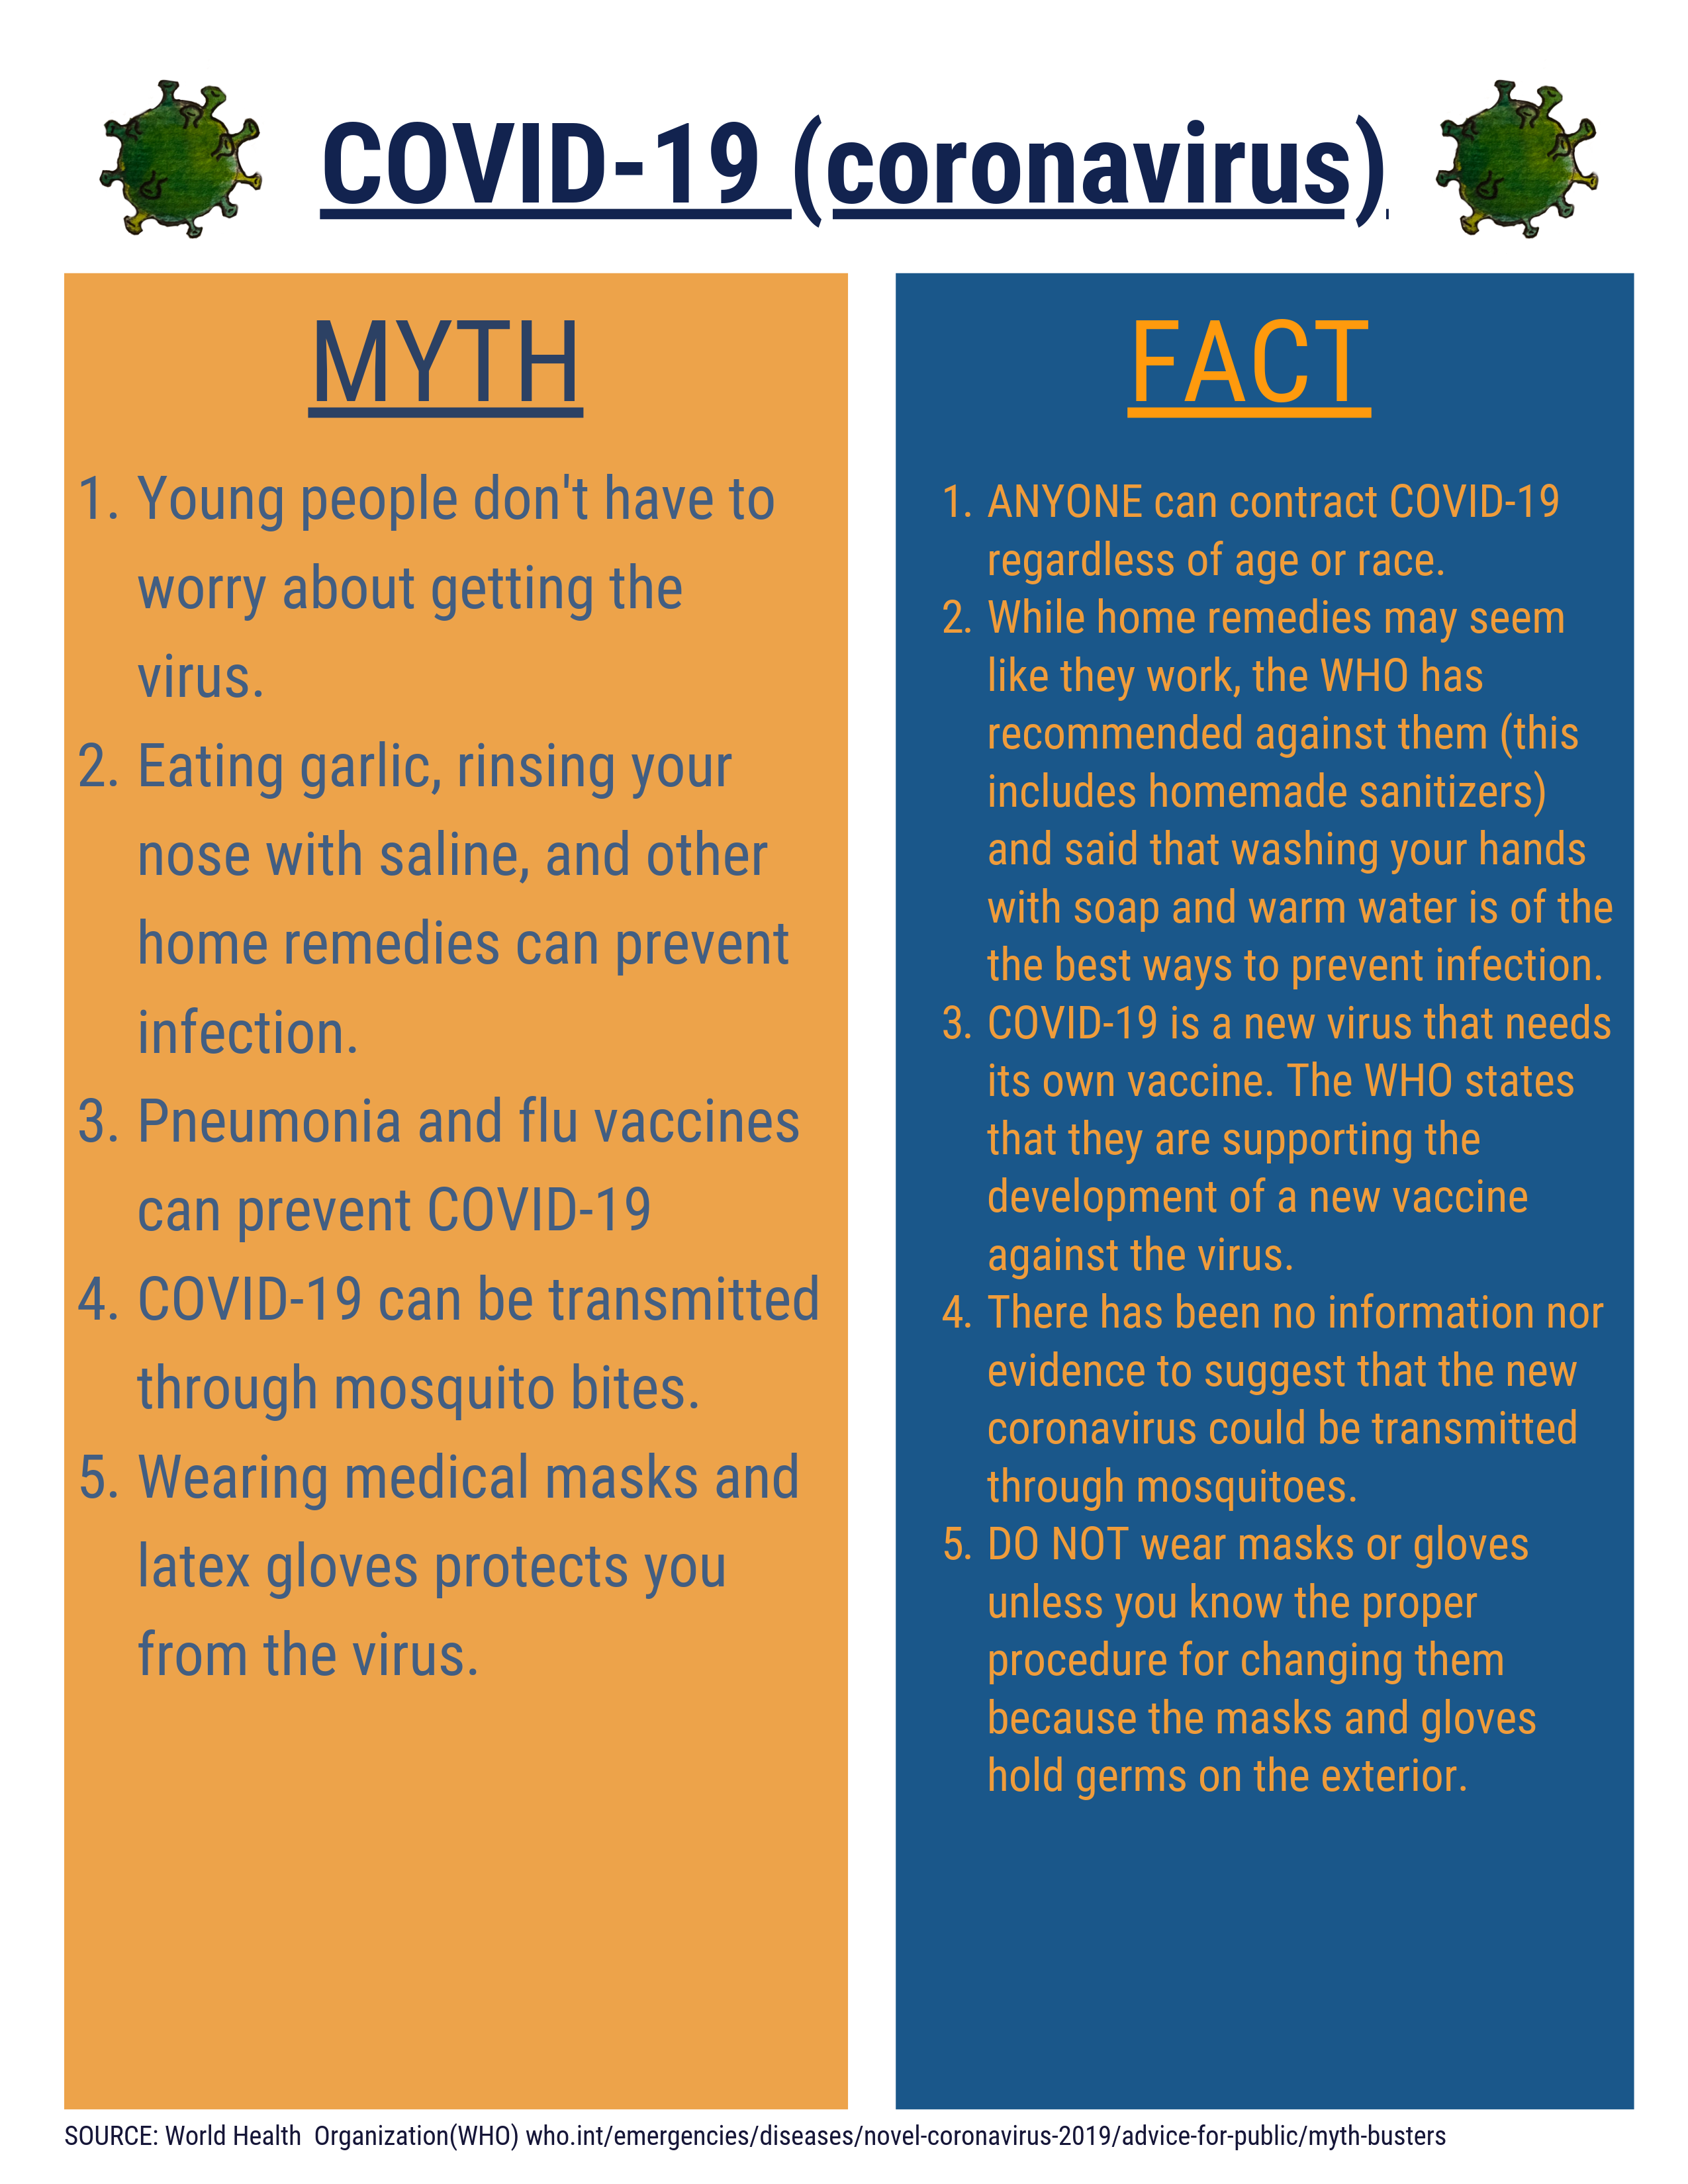 COVID-19 myths debunked